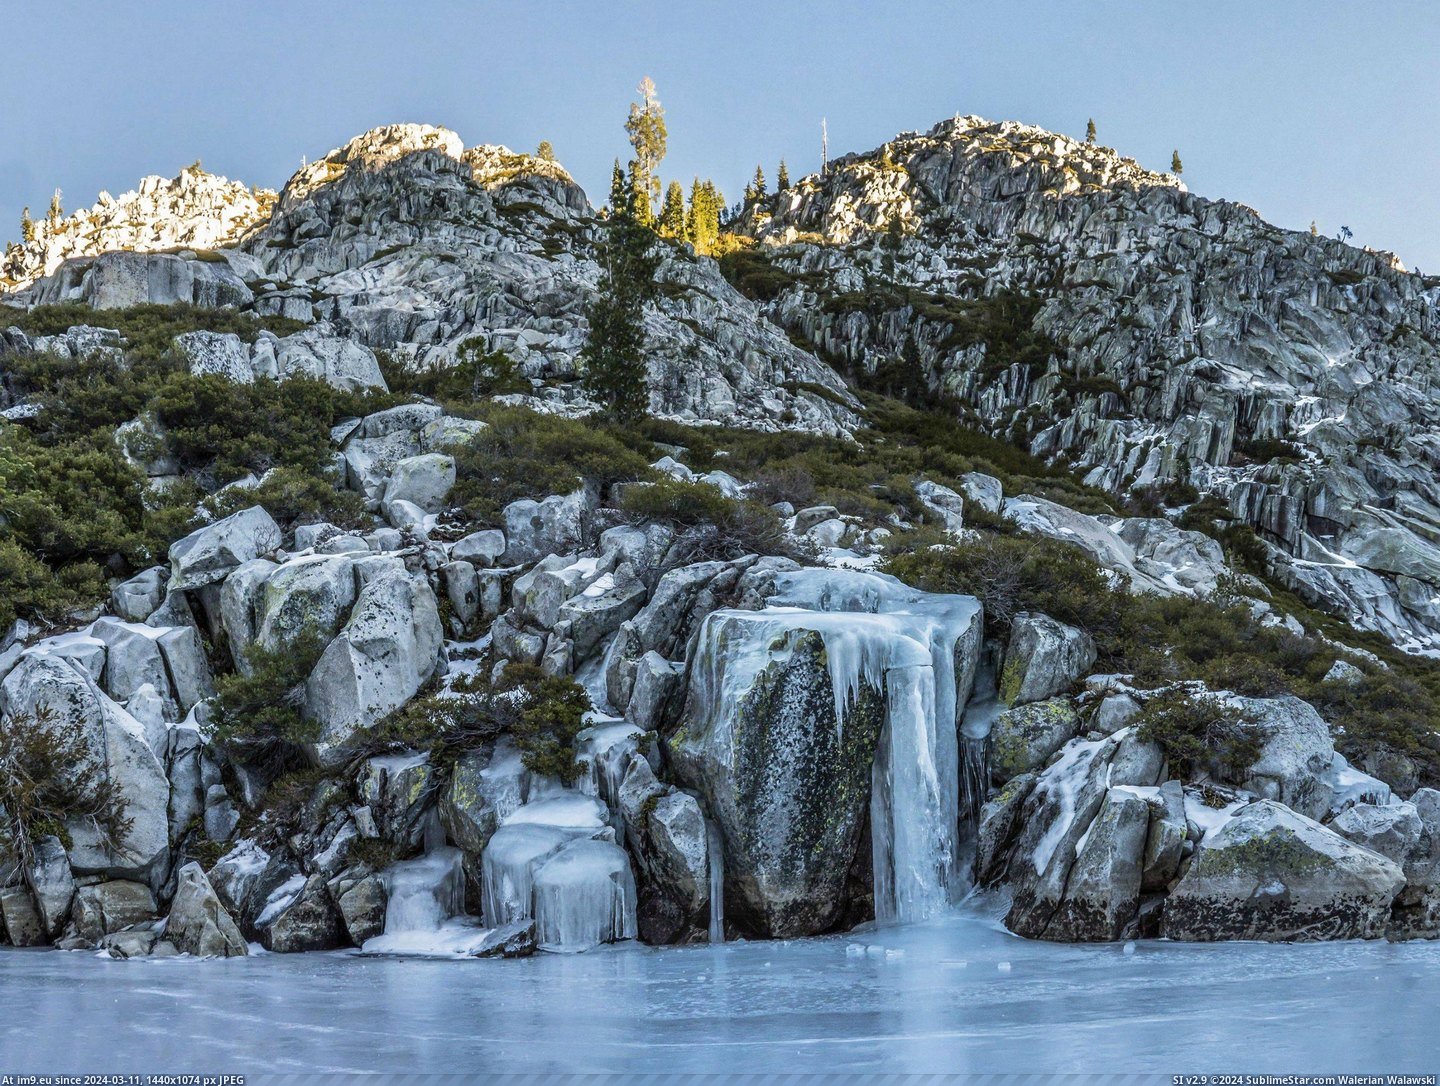 #Big #Lake #Bear #Trinity #Shore #Wilderness #2700x2025 #Frozen #Waterfall #Alps [Earthporn] 'Frozen Waterfall' at the shore of Big Bear Lake in the Trinity Alps Wilderness [OC][2700x2025] Pic. (Bild von album My r/EARTHPORN favs))